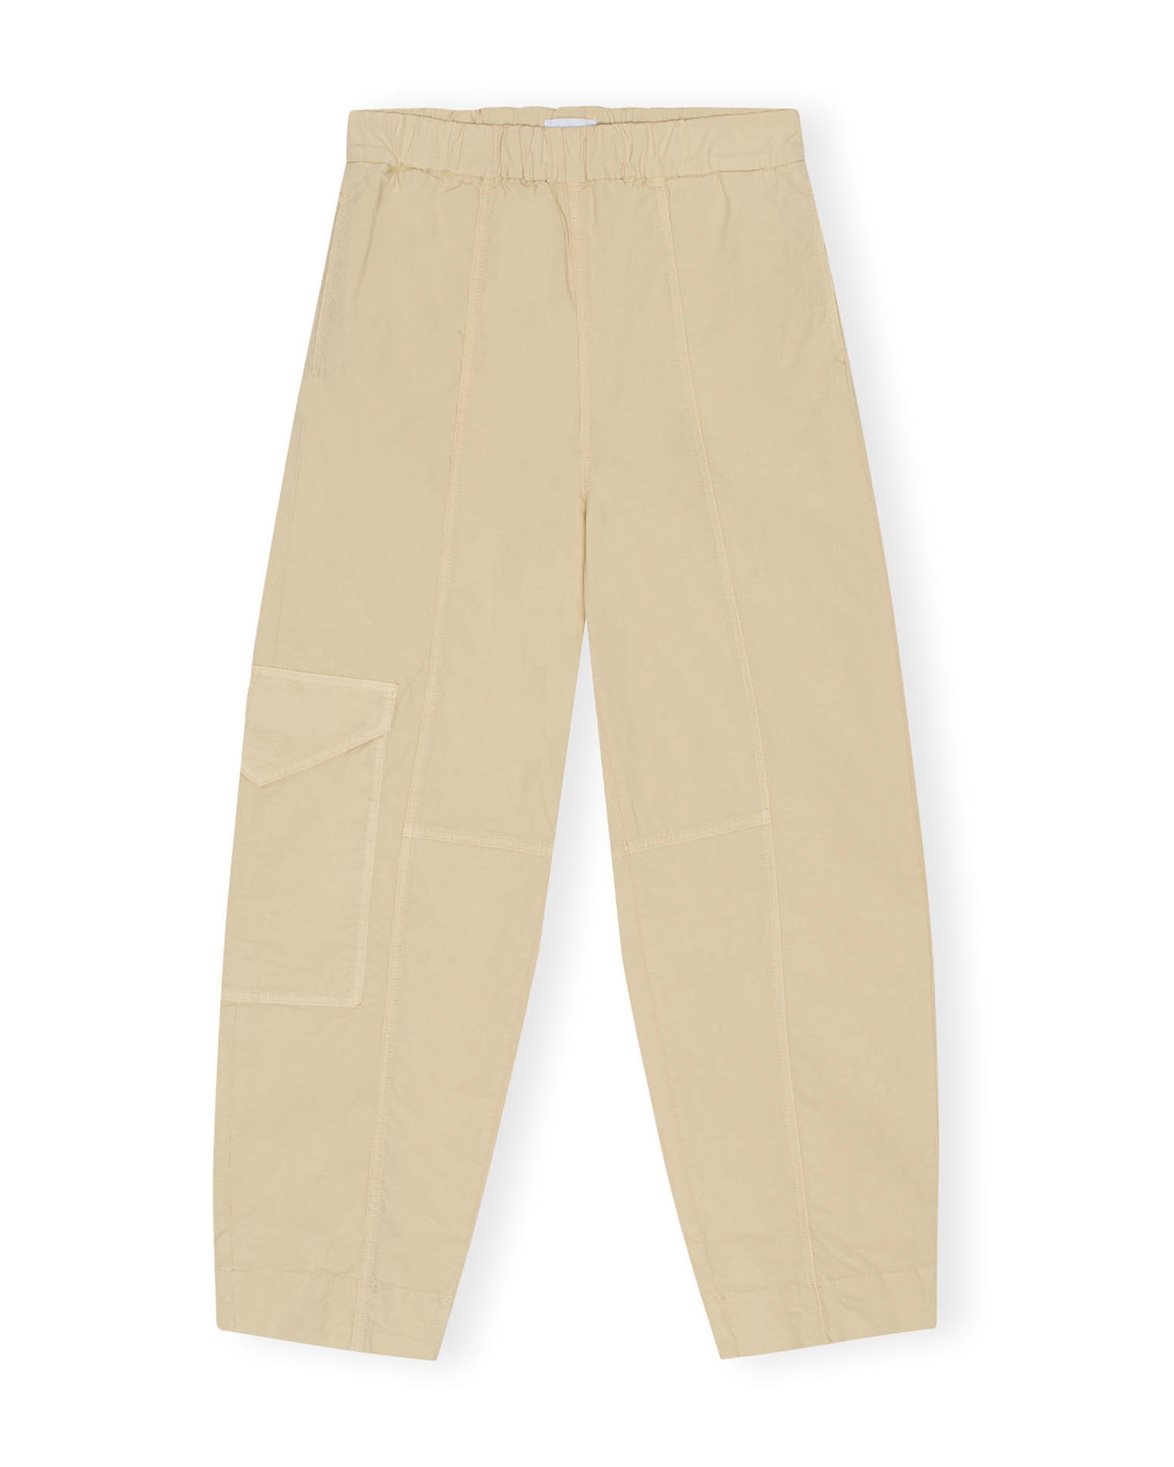 CARHARTT WIP WideLeg CottonCanvas Trousers for Men  MR PORTER